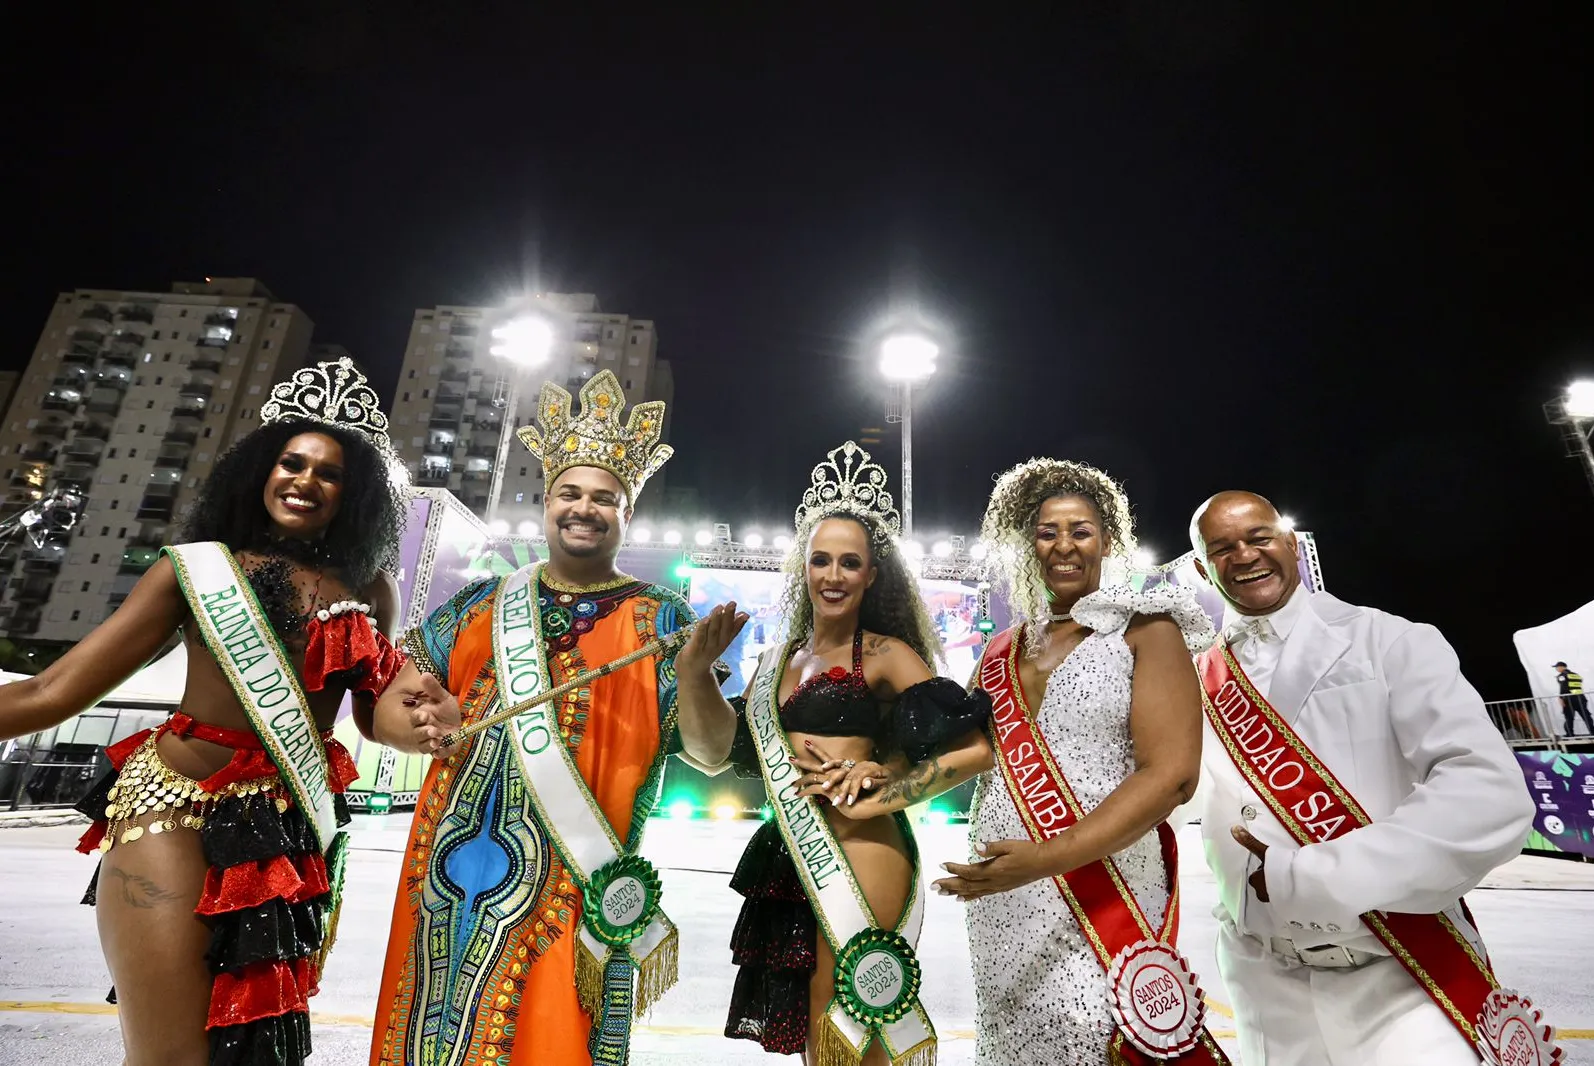 A corte carnavalesca abriu oficialmente a primeira noite de desfiles